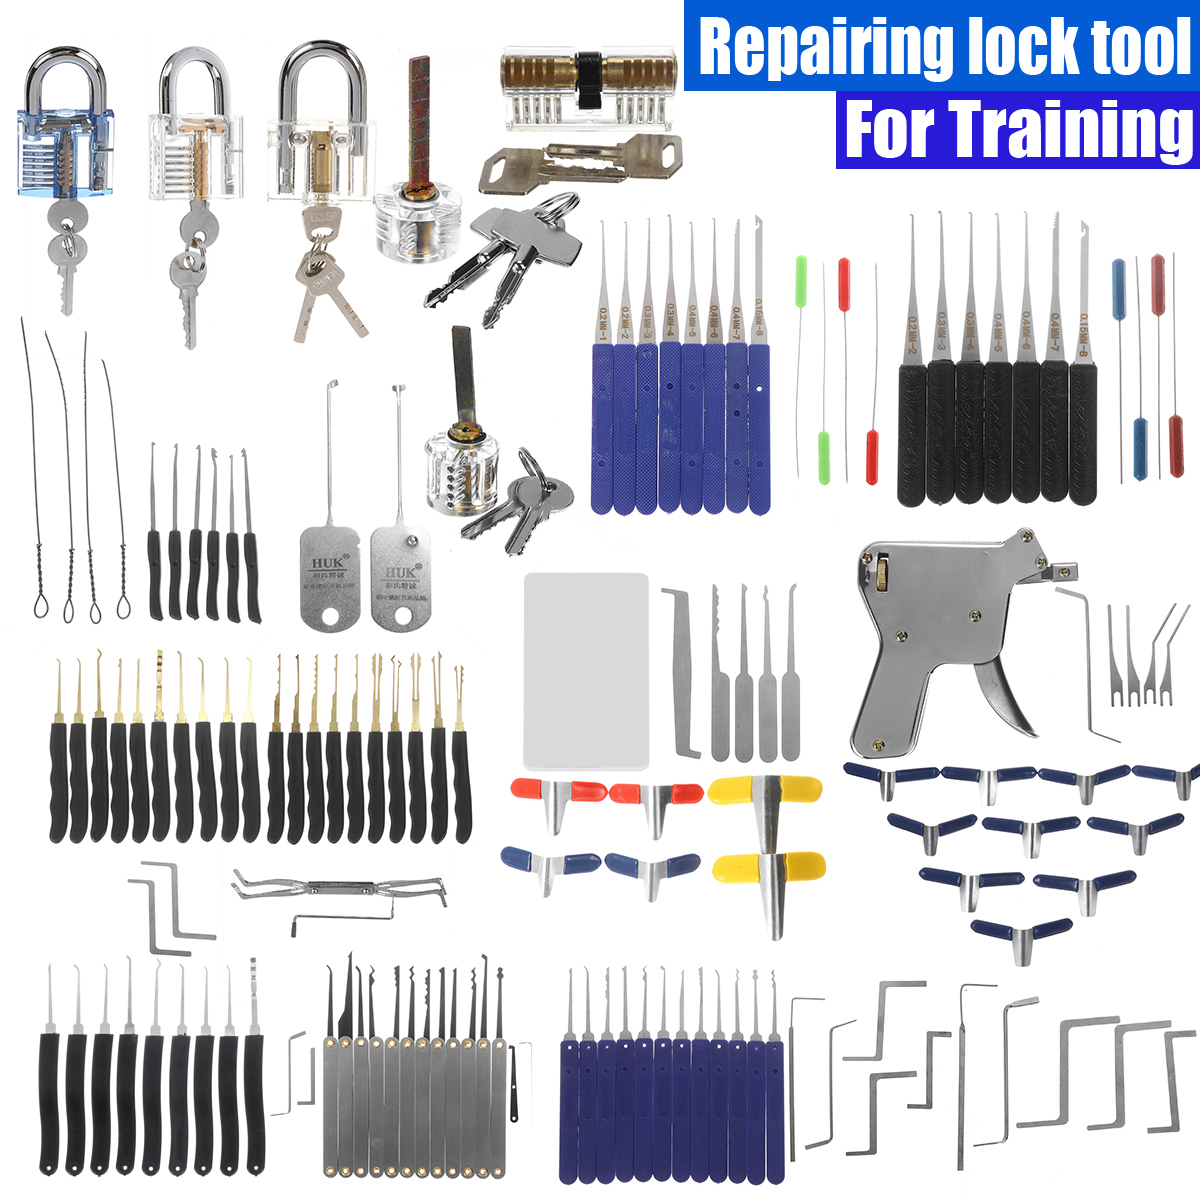 Find Lock Repair Tool Manual Lock Repair Tool Set for Sale on Gipsybee.com with cryptocurrencies